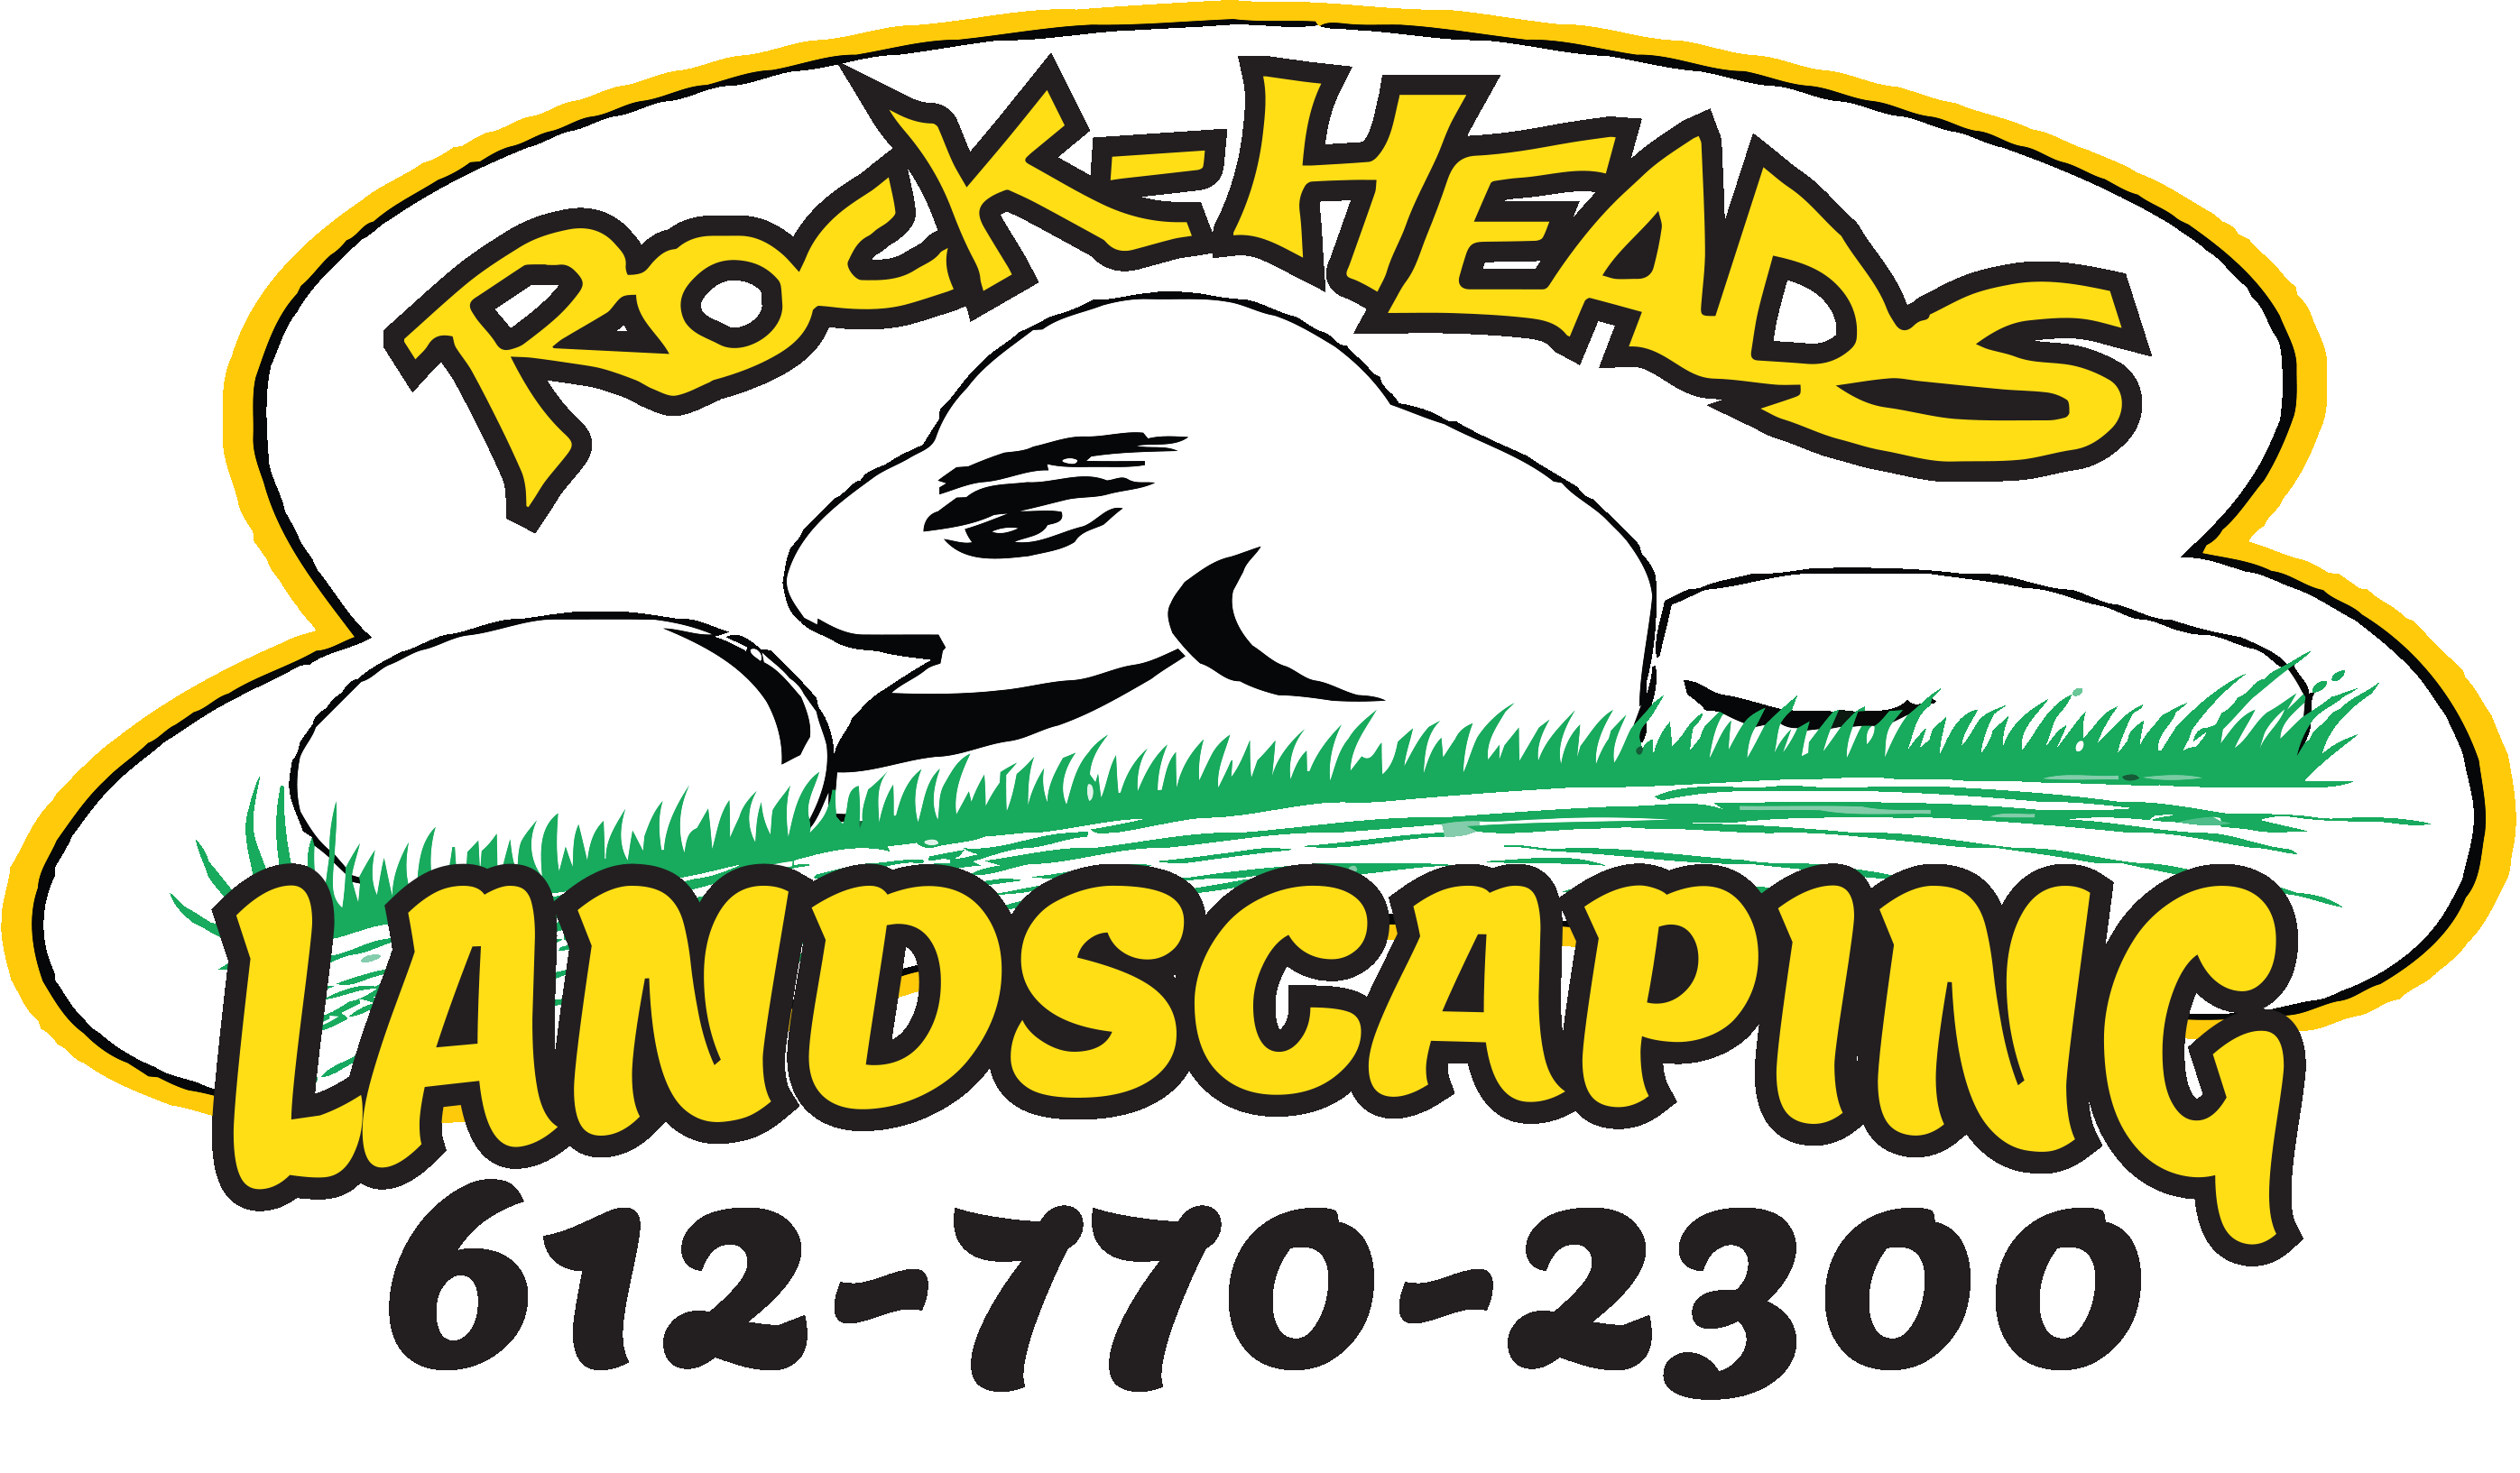 Rockheads Landscaping Logo